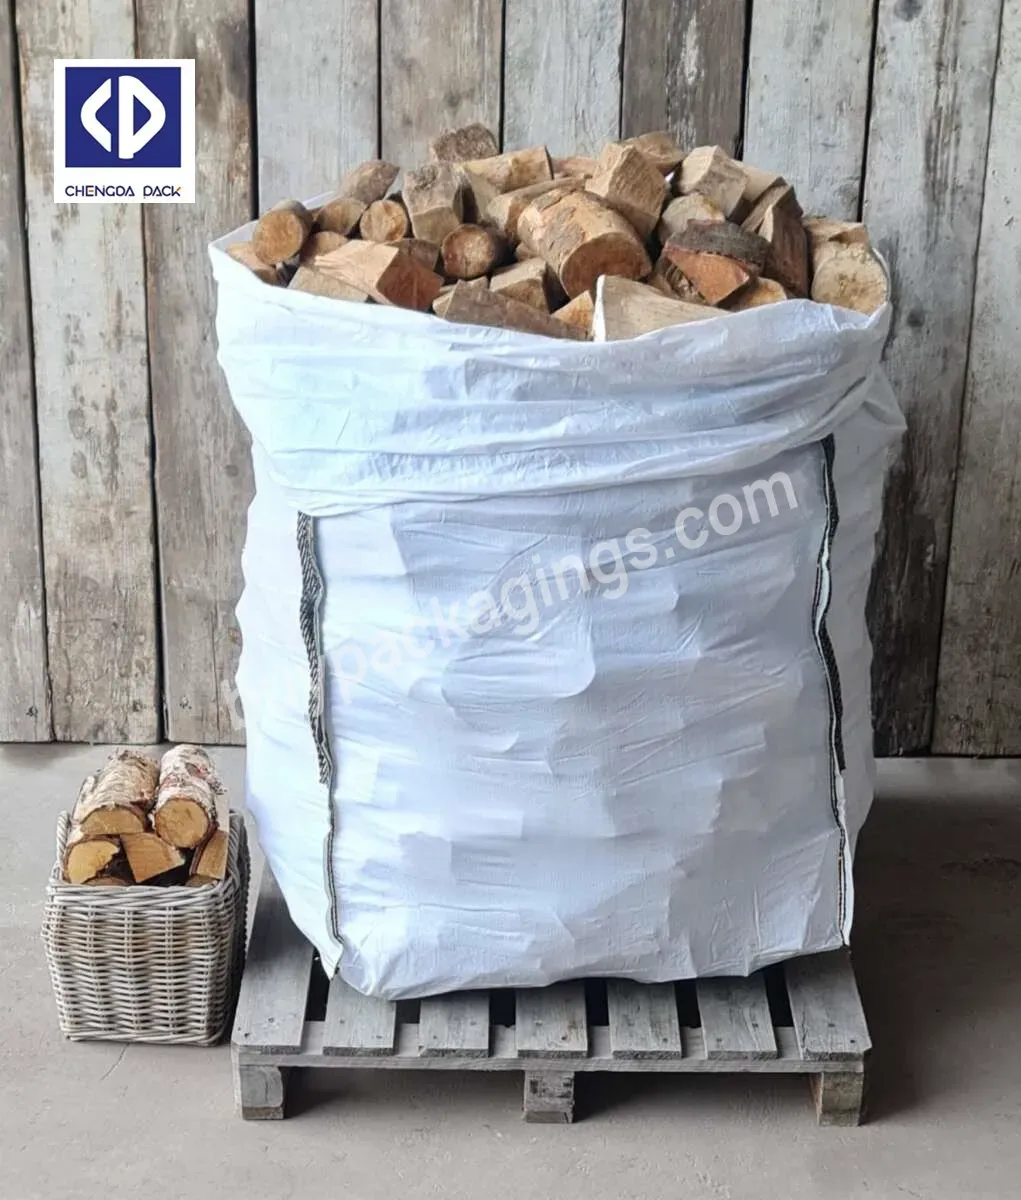 1000kg Pp Jumbo Plastic Bulk Container Fibc Bag Plastic Bags For Firewood